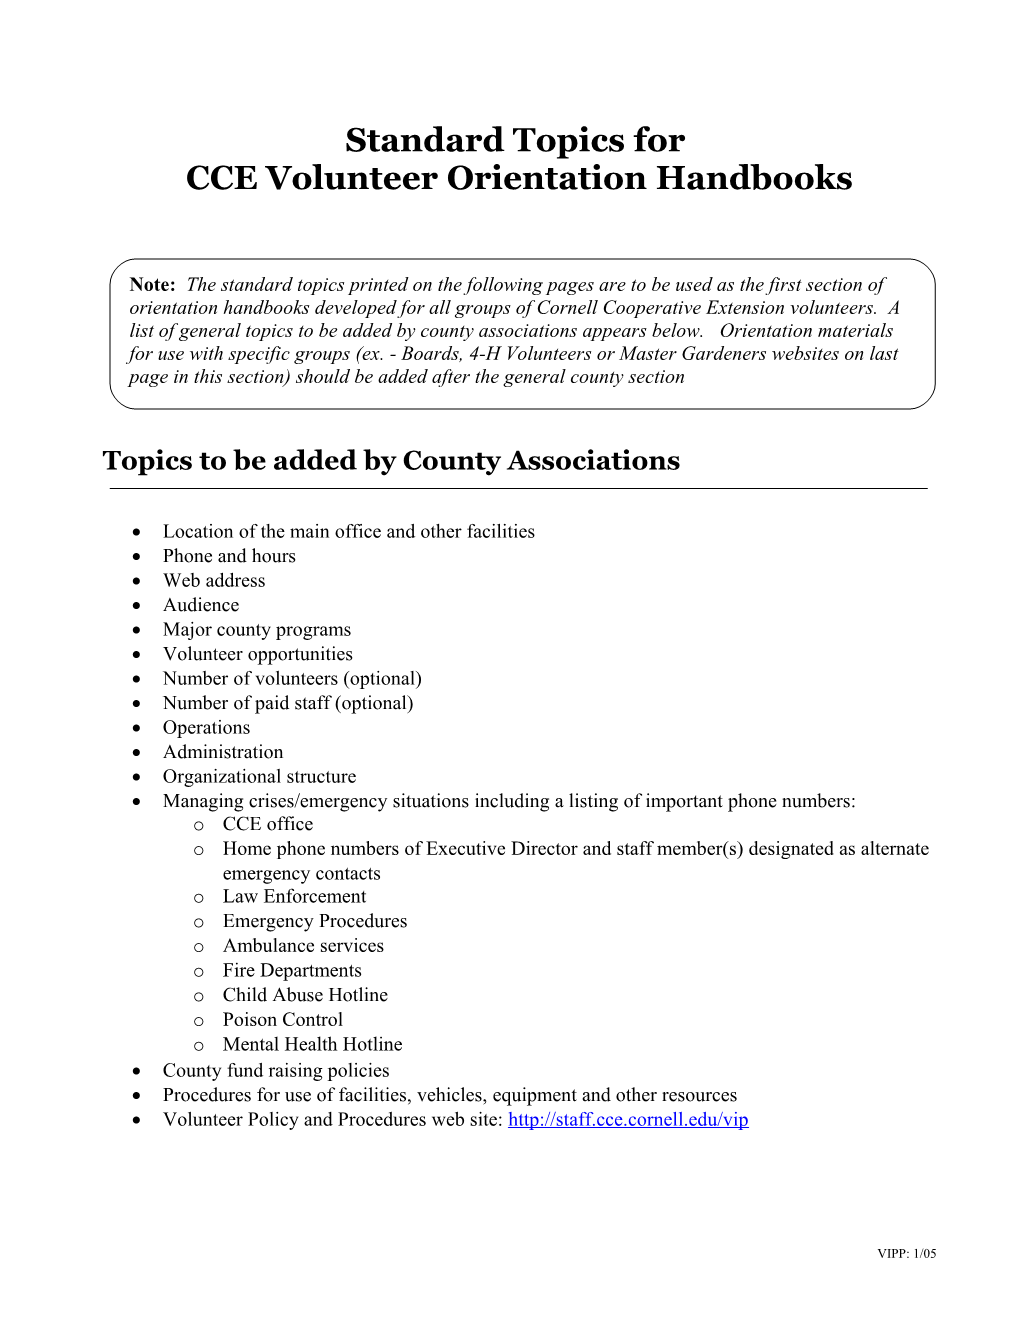 CCE Volunteer Orientation Handbooks